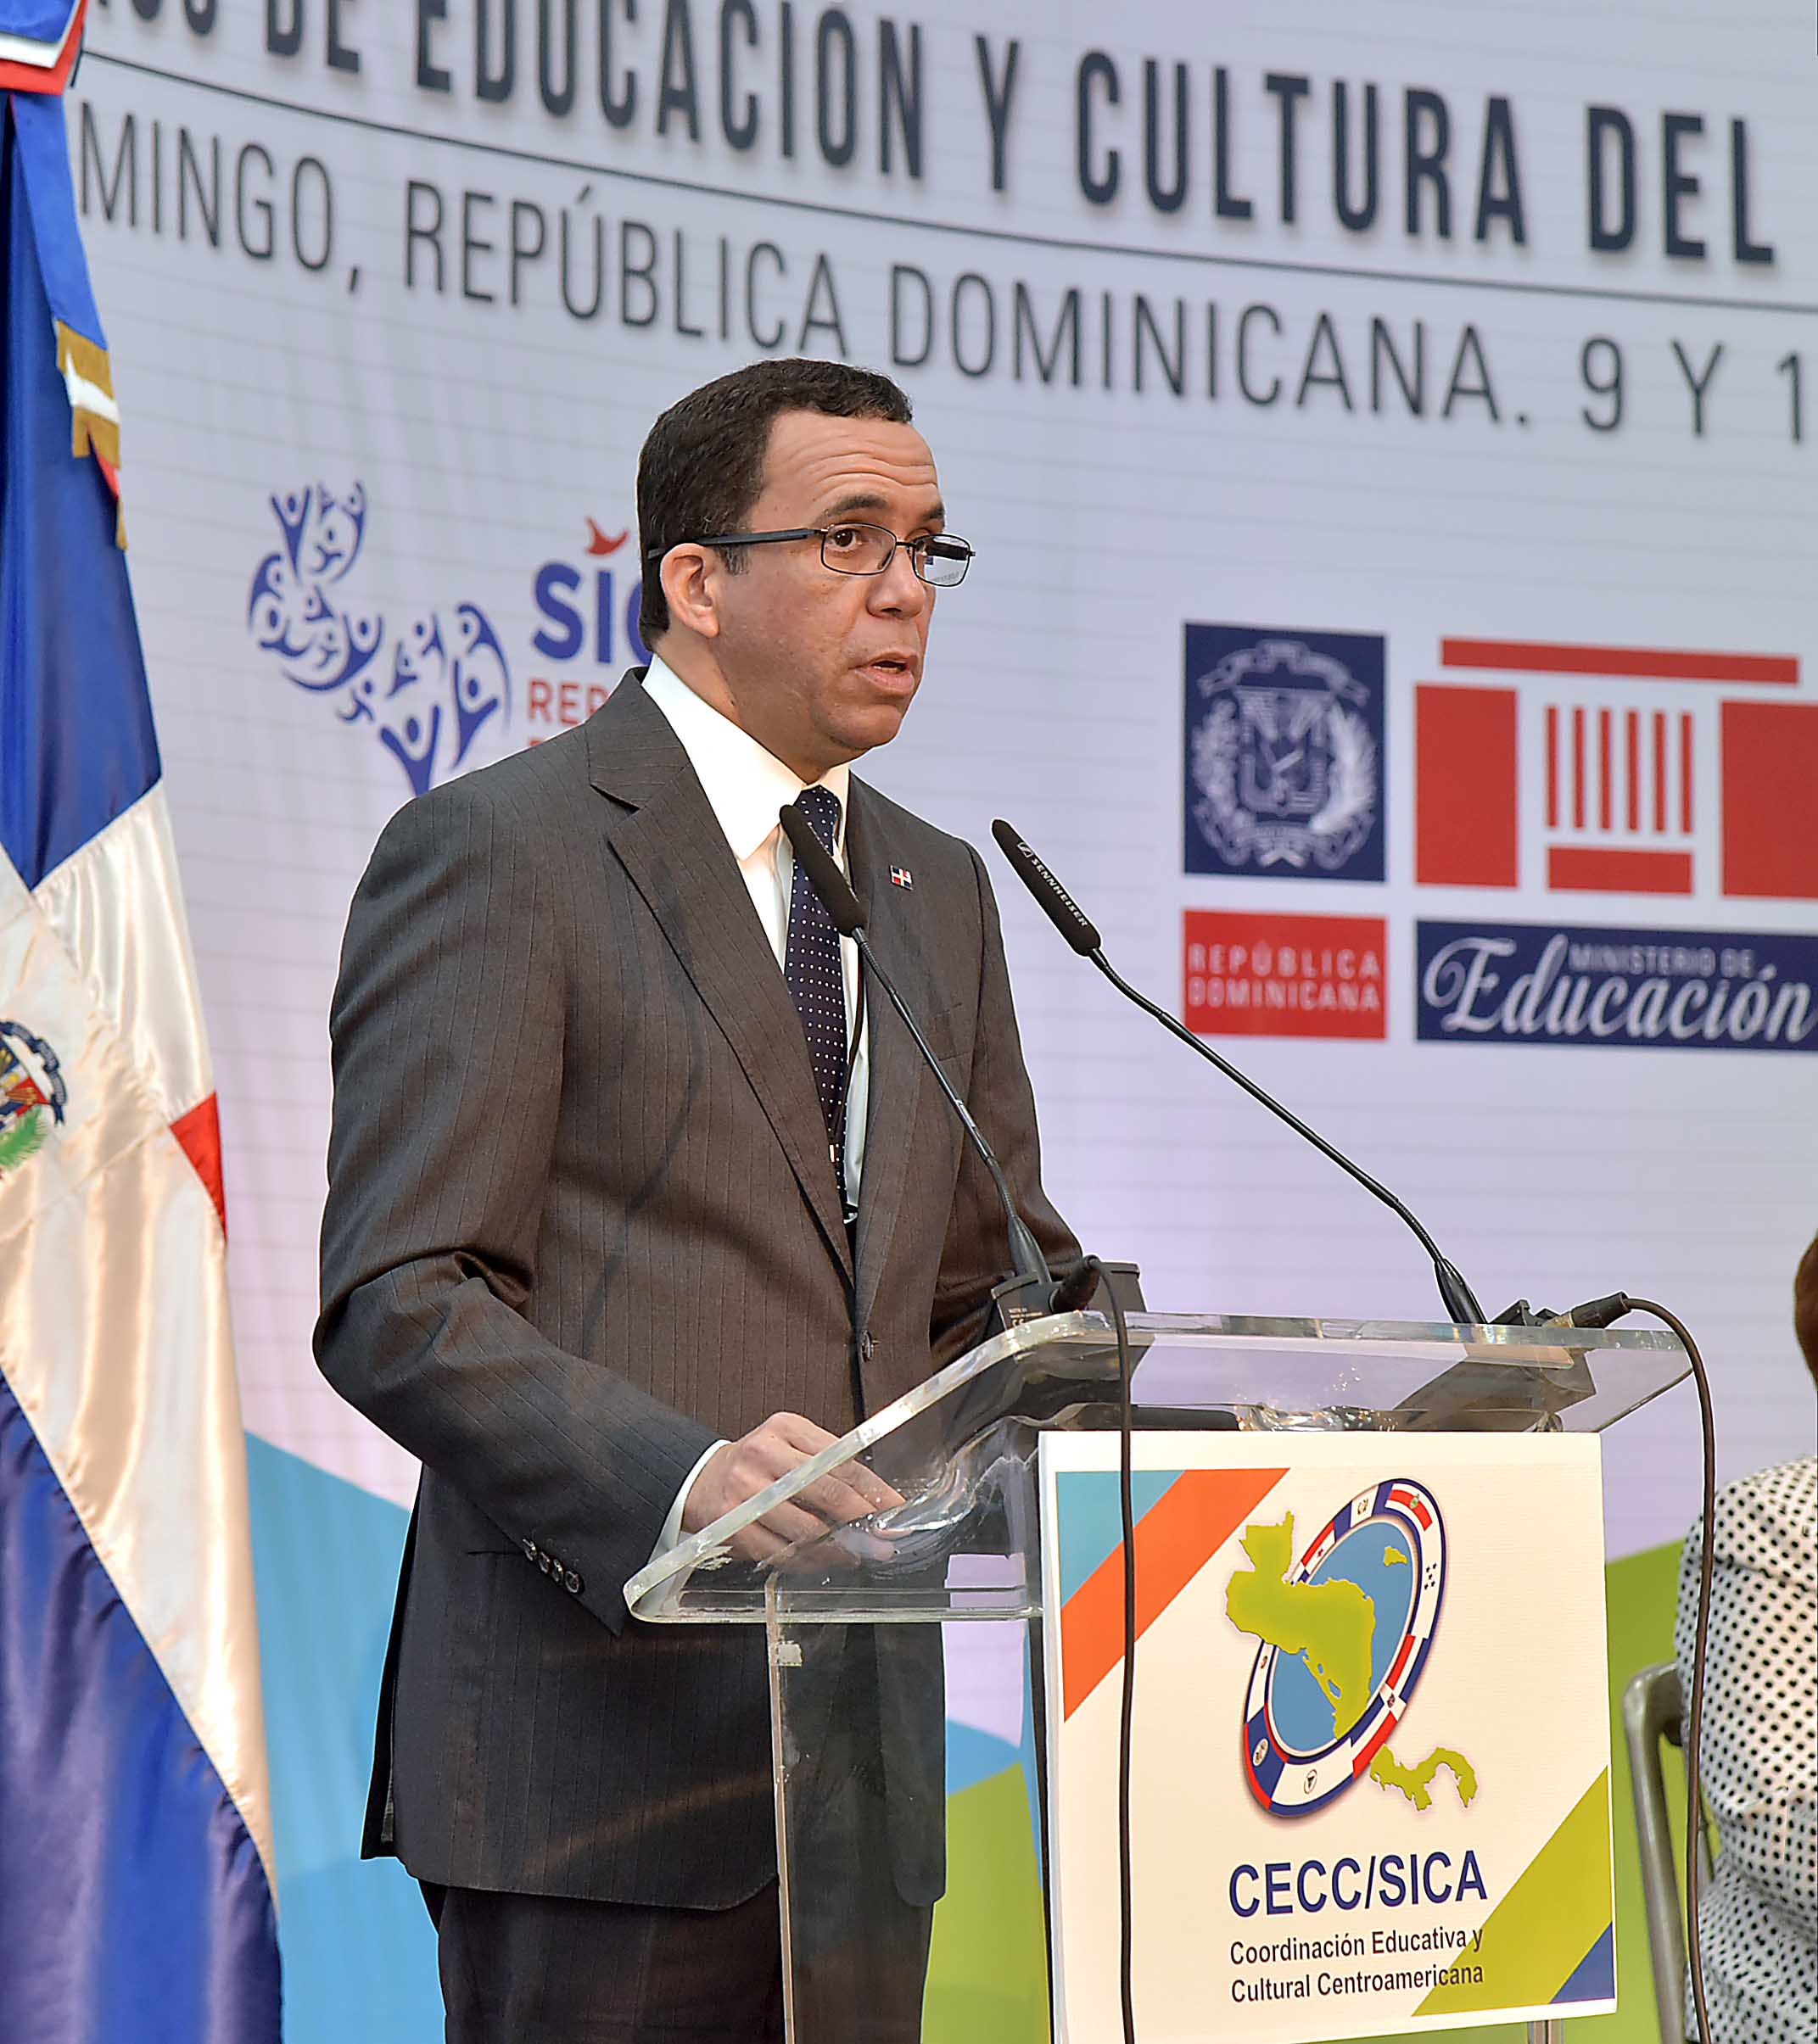  imagen Ministro Andrés Navarro en podium se dirige al público  